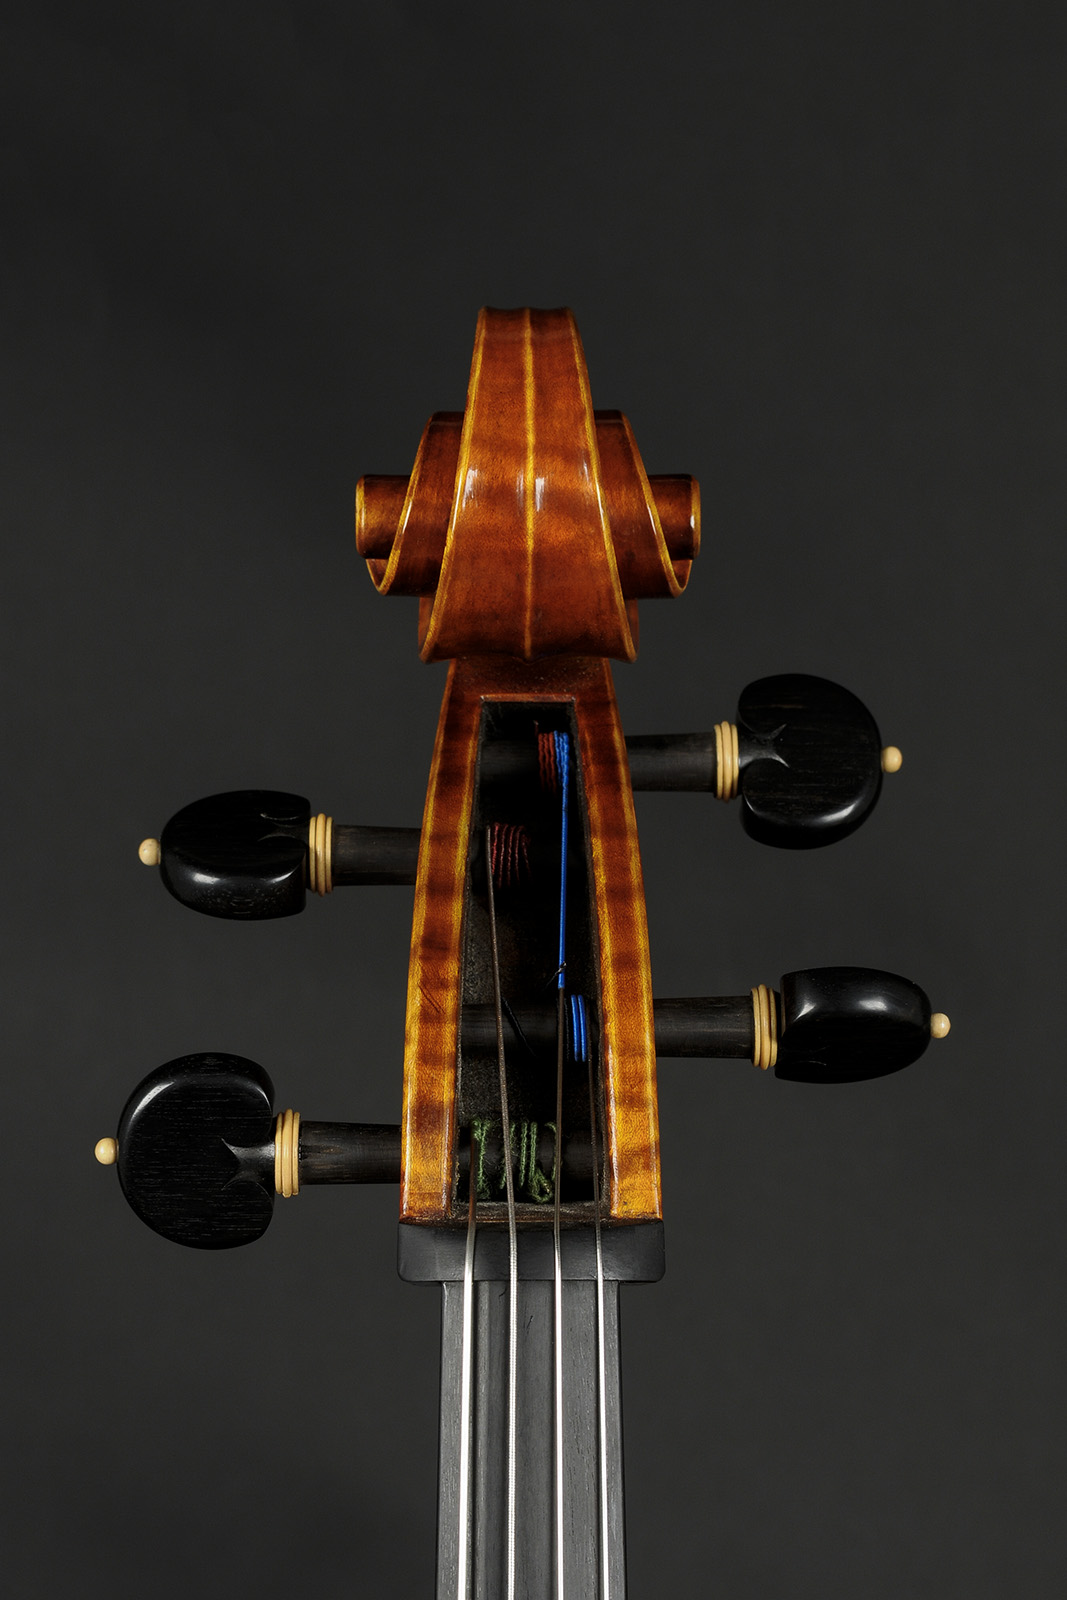 Antonio Stradivari Cremona 1712 “Davidoff“ - Image 7